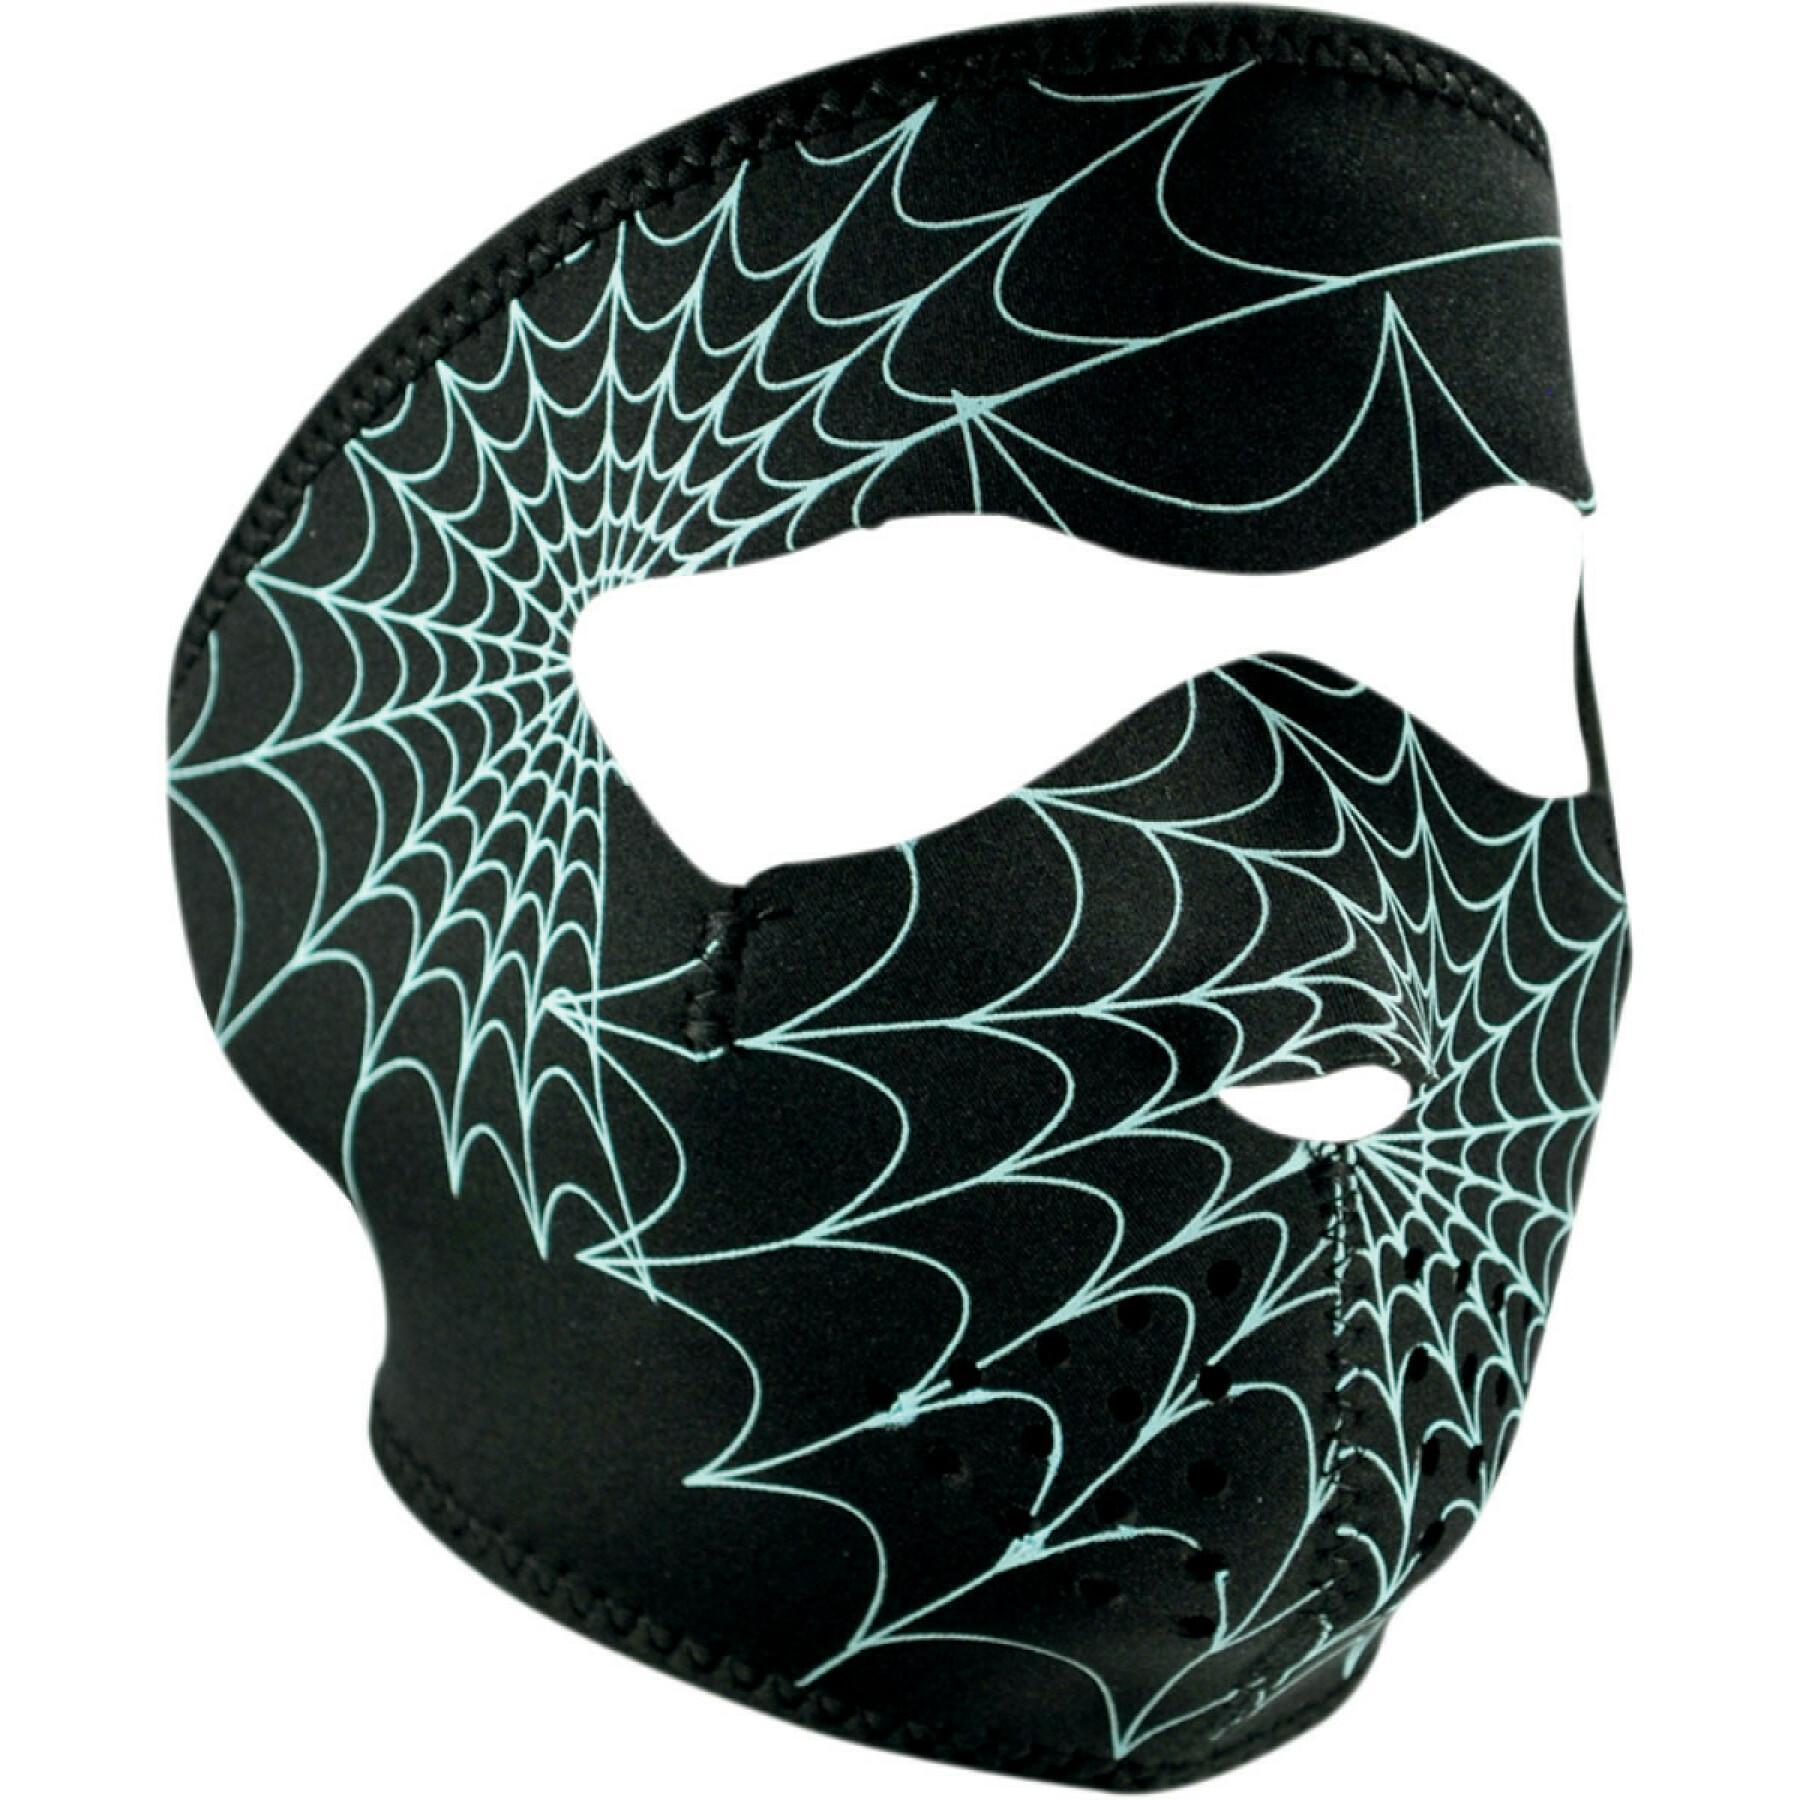 Cagoule moto Zan Headgear full face glow-in-the-dark spider web